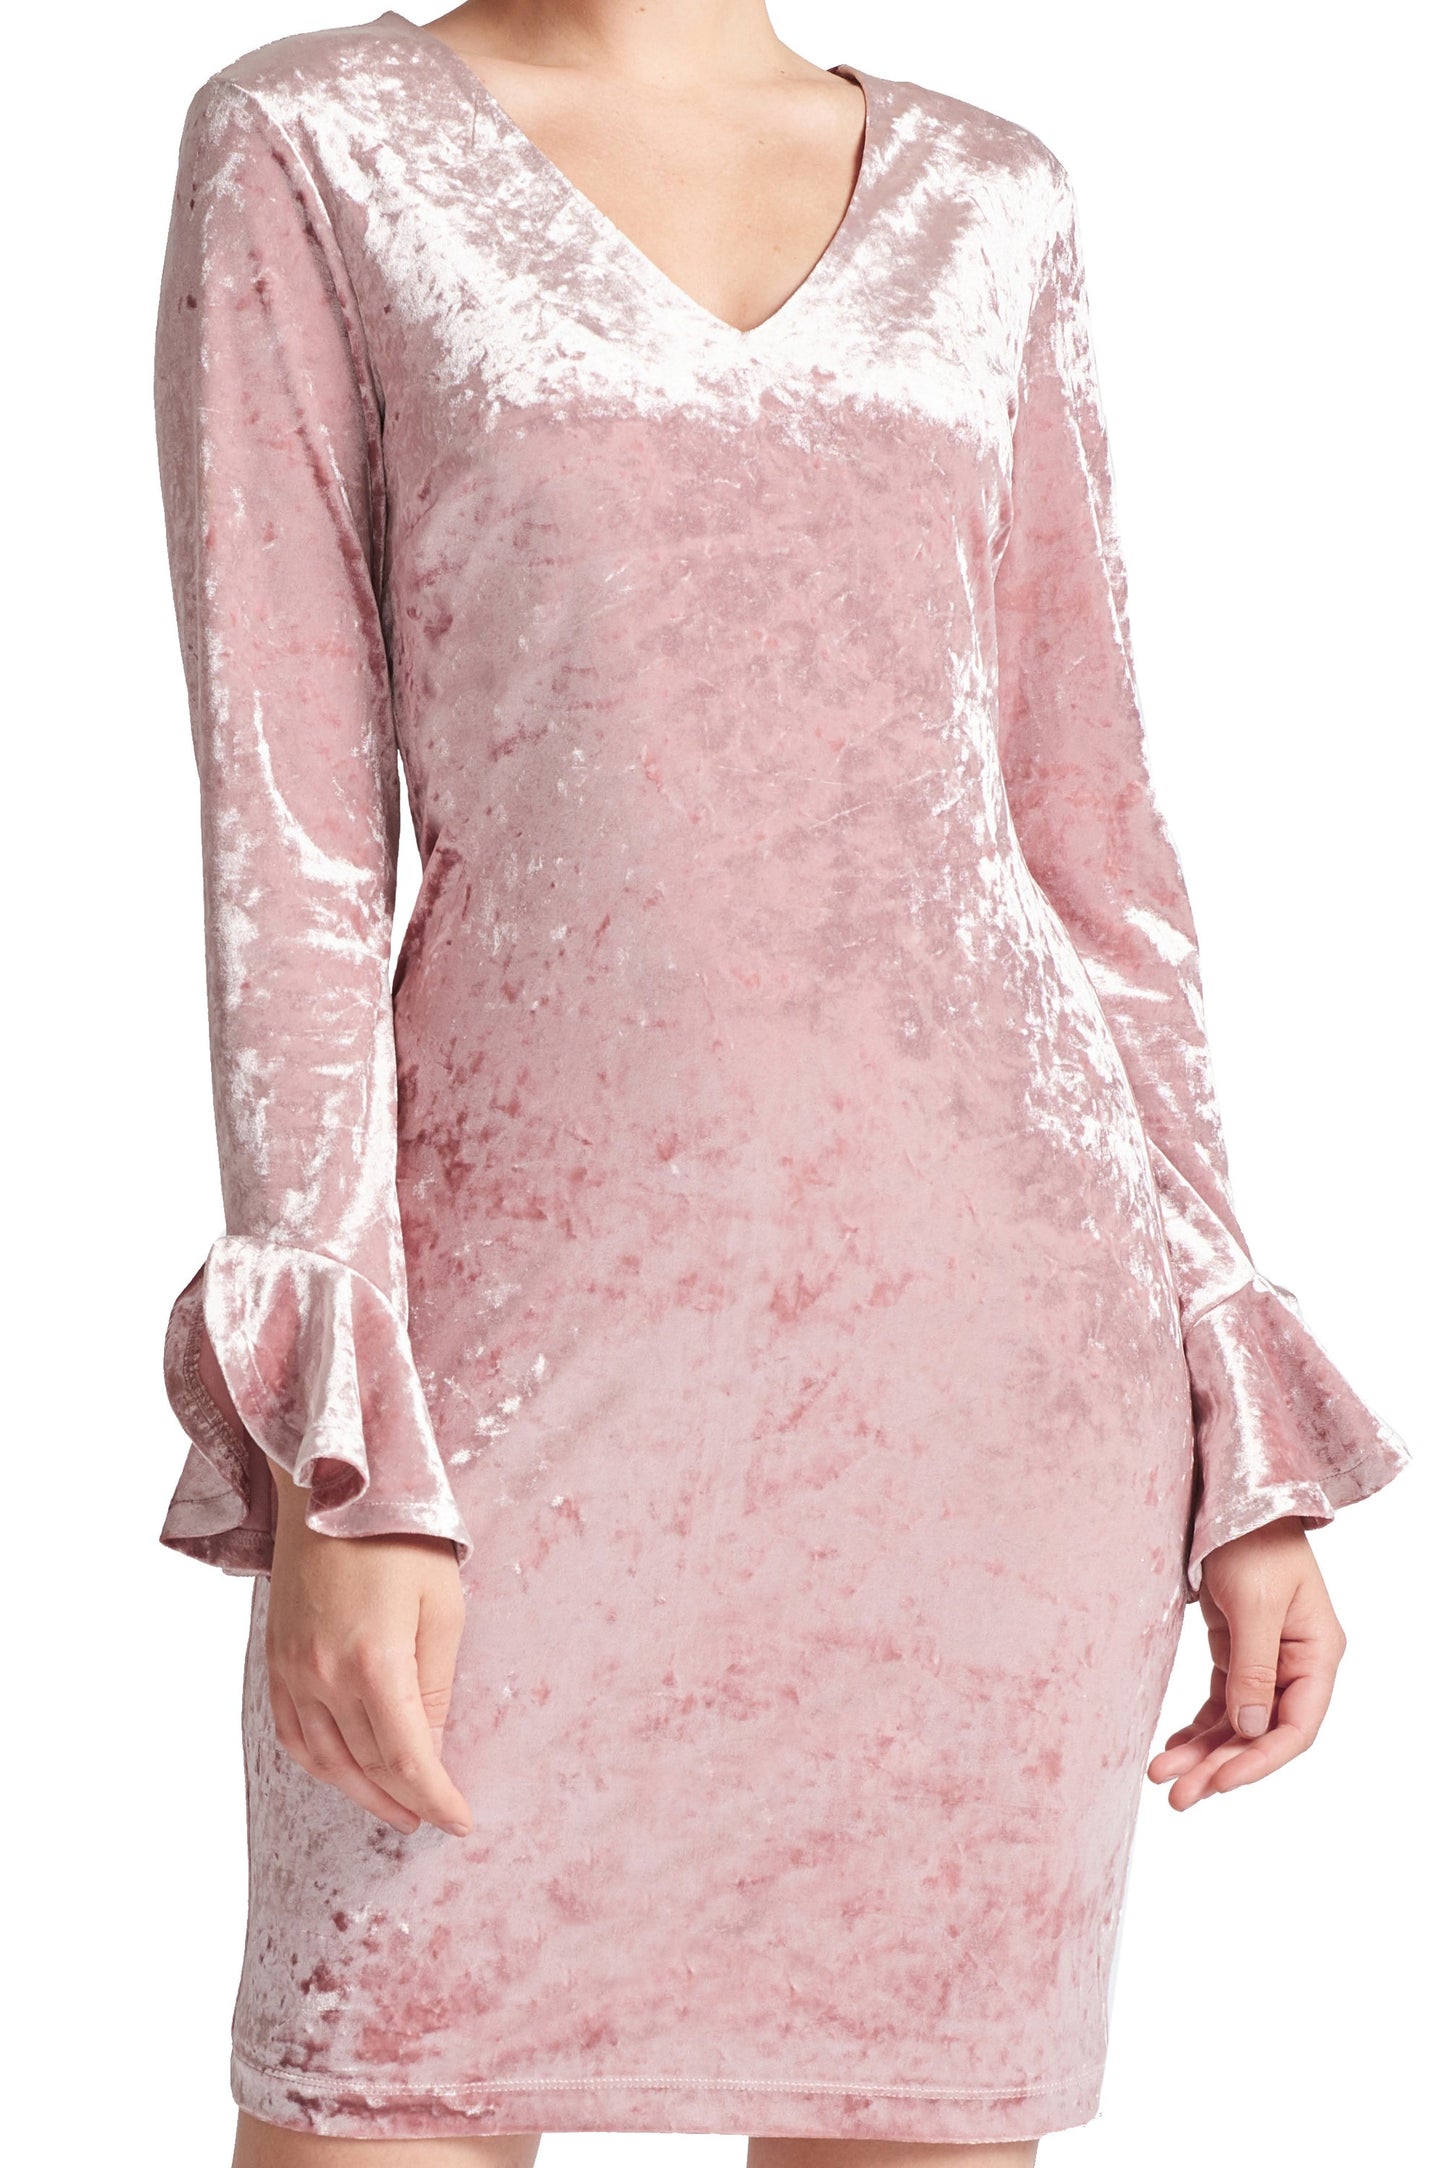 Kara Dress - Long sleeve crushed velvet v-neck dress adorned with bell